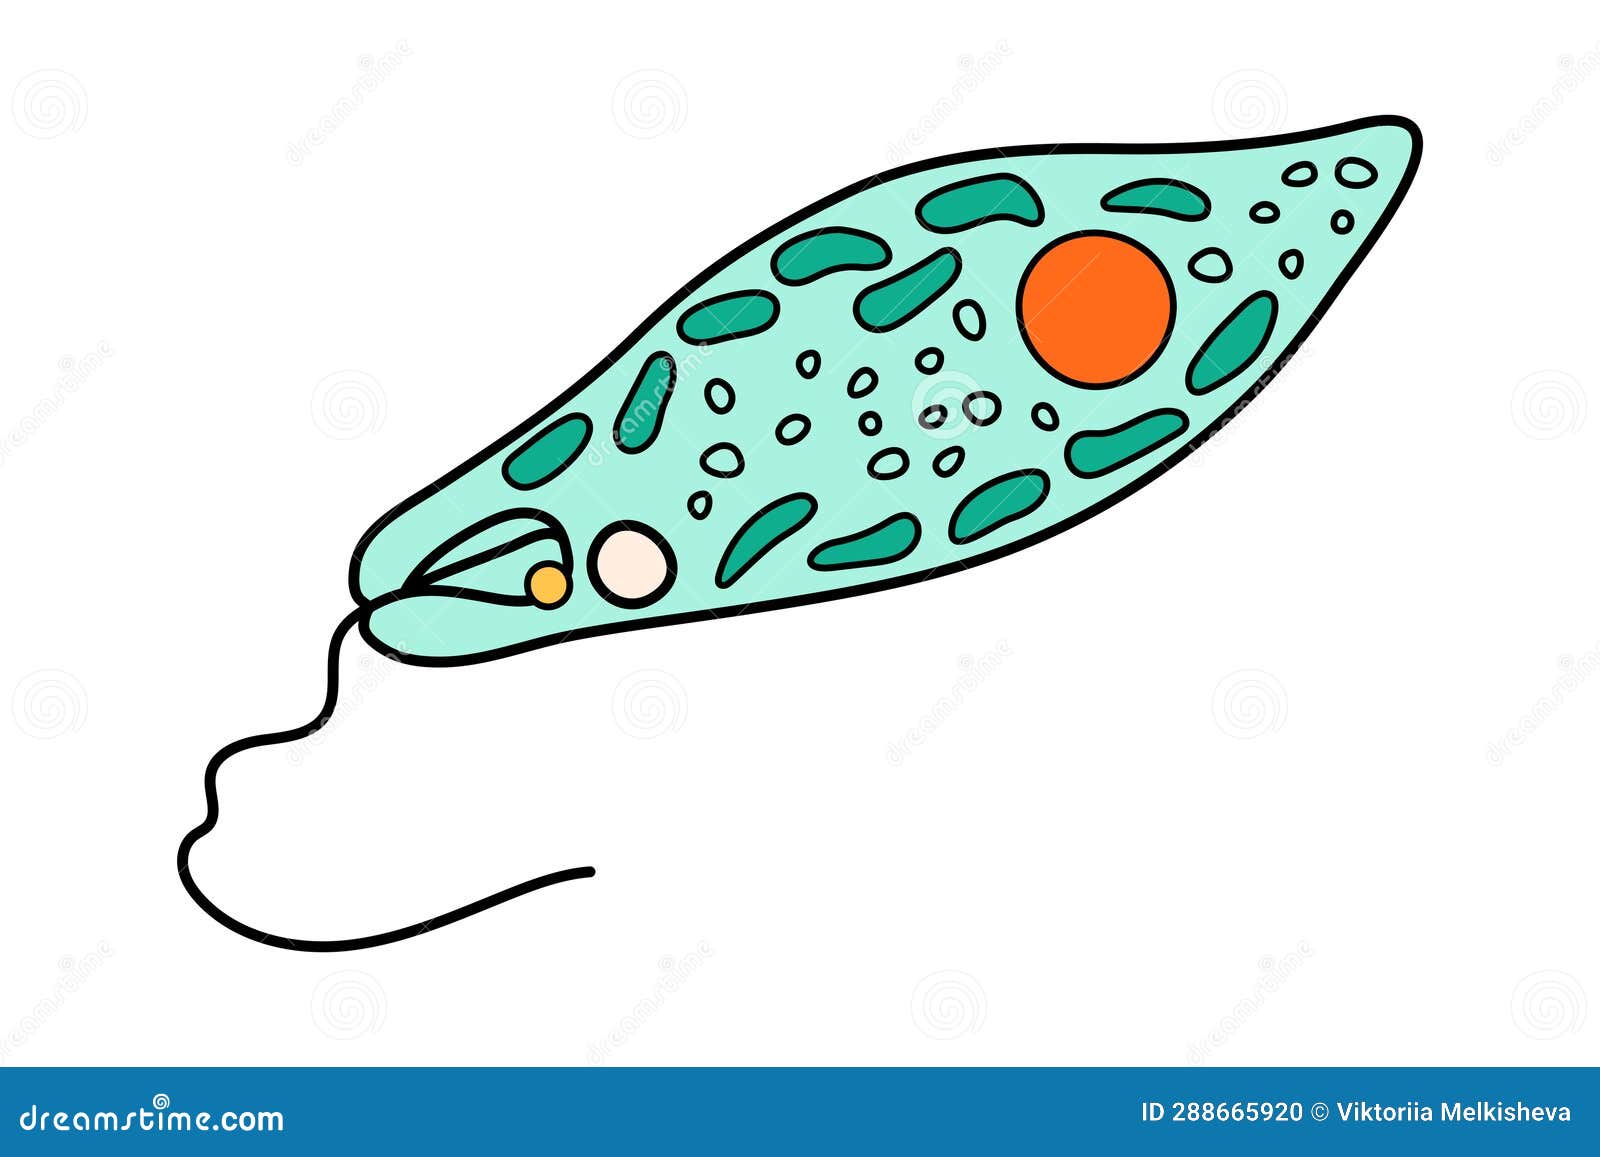 euglena viridis proteus science icon with nucleus, vacuole, contractile. biology education laboratory cartoon protozoa